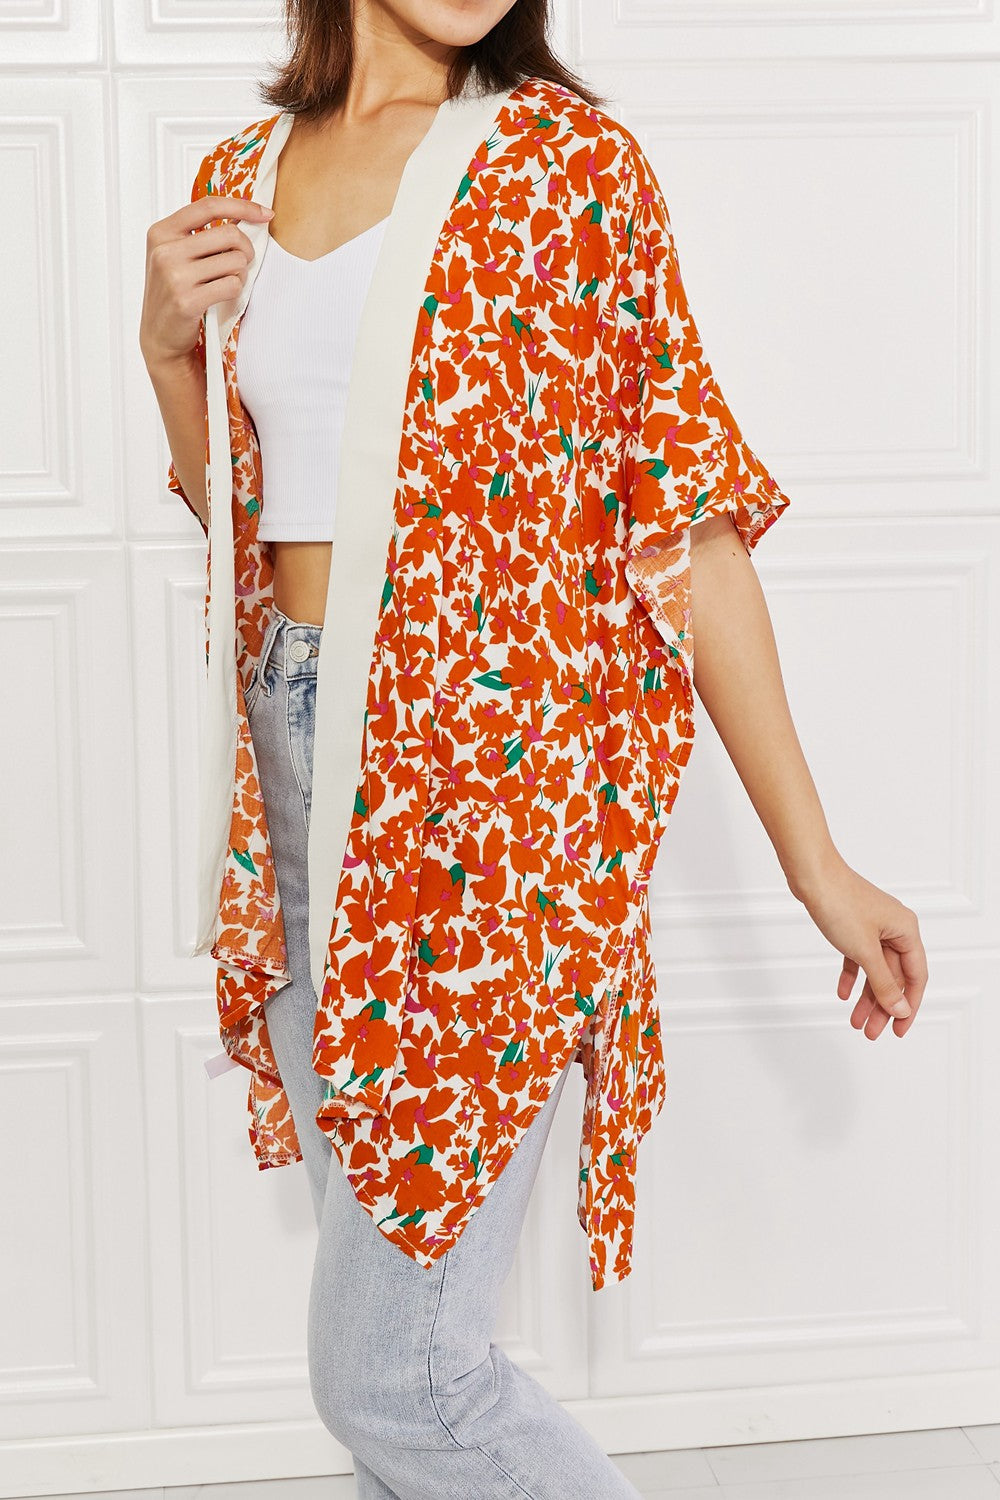 Justin Taylor Citrus Blossom Floral Contrast Trim Kimono | - CHANELIA